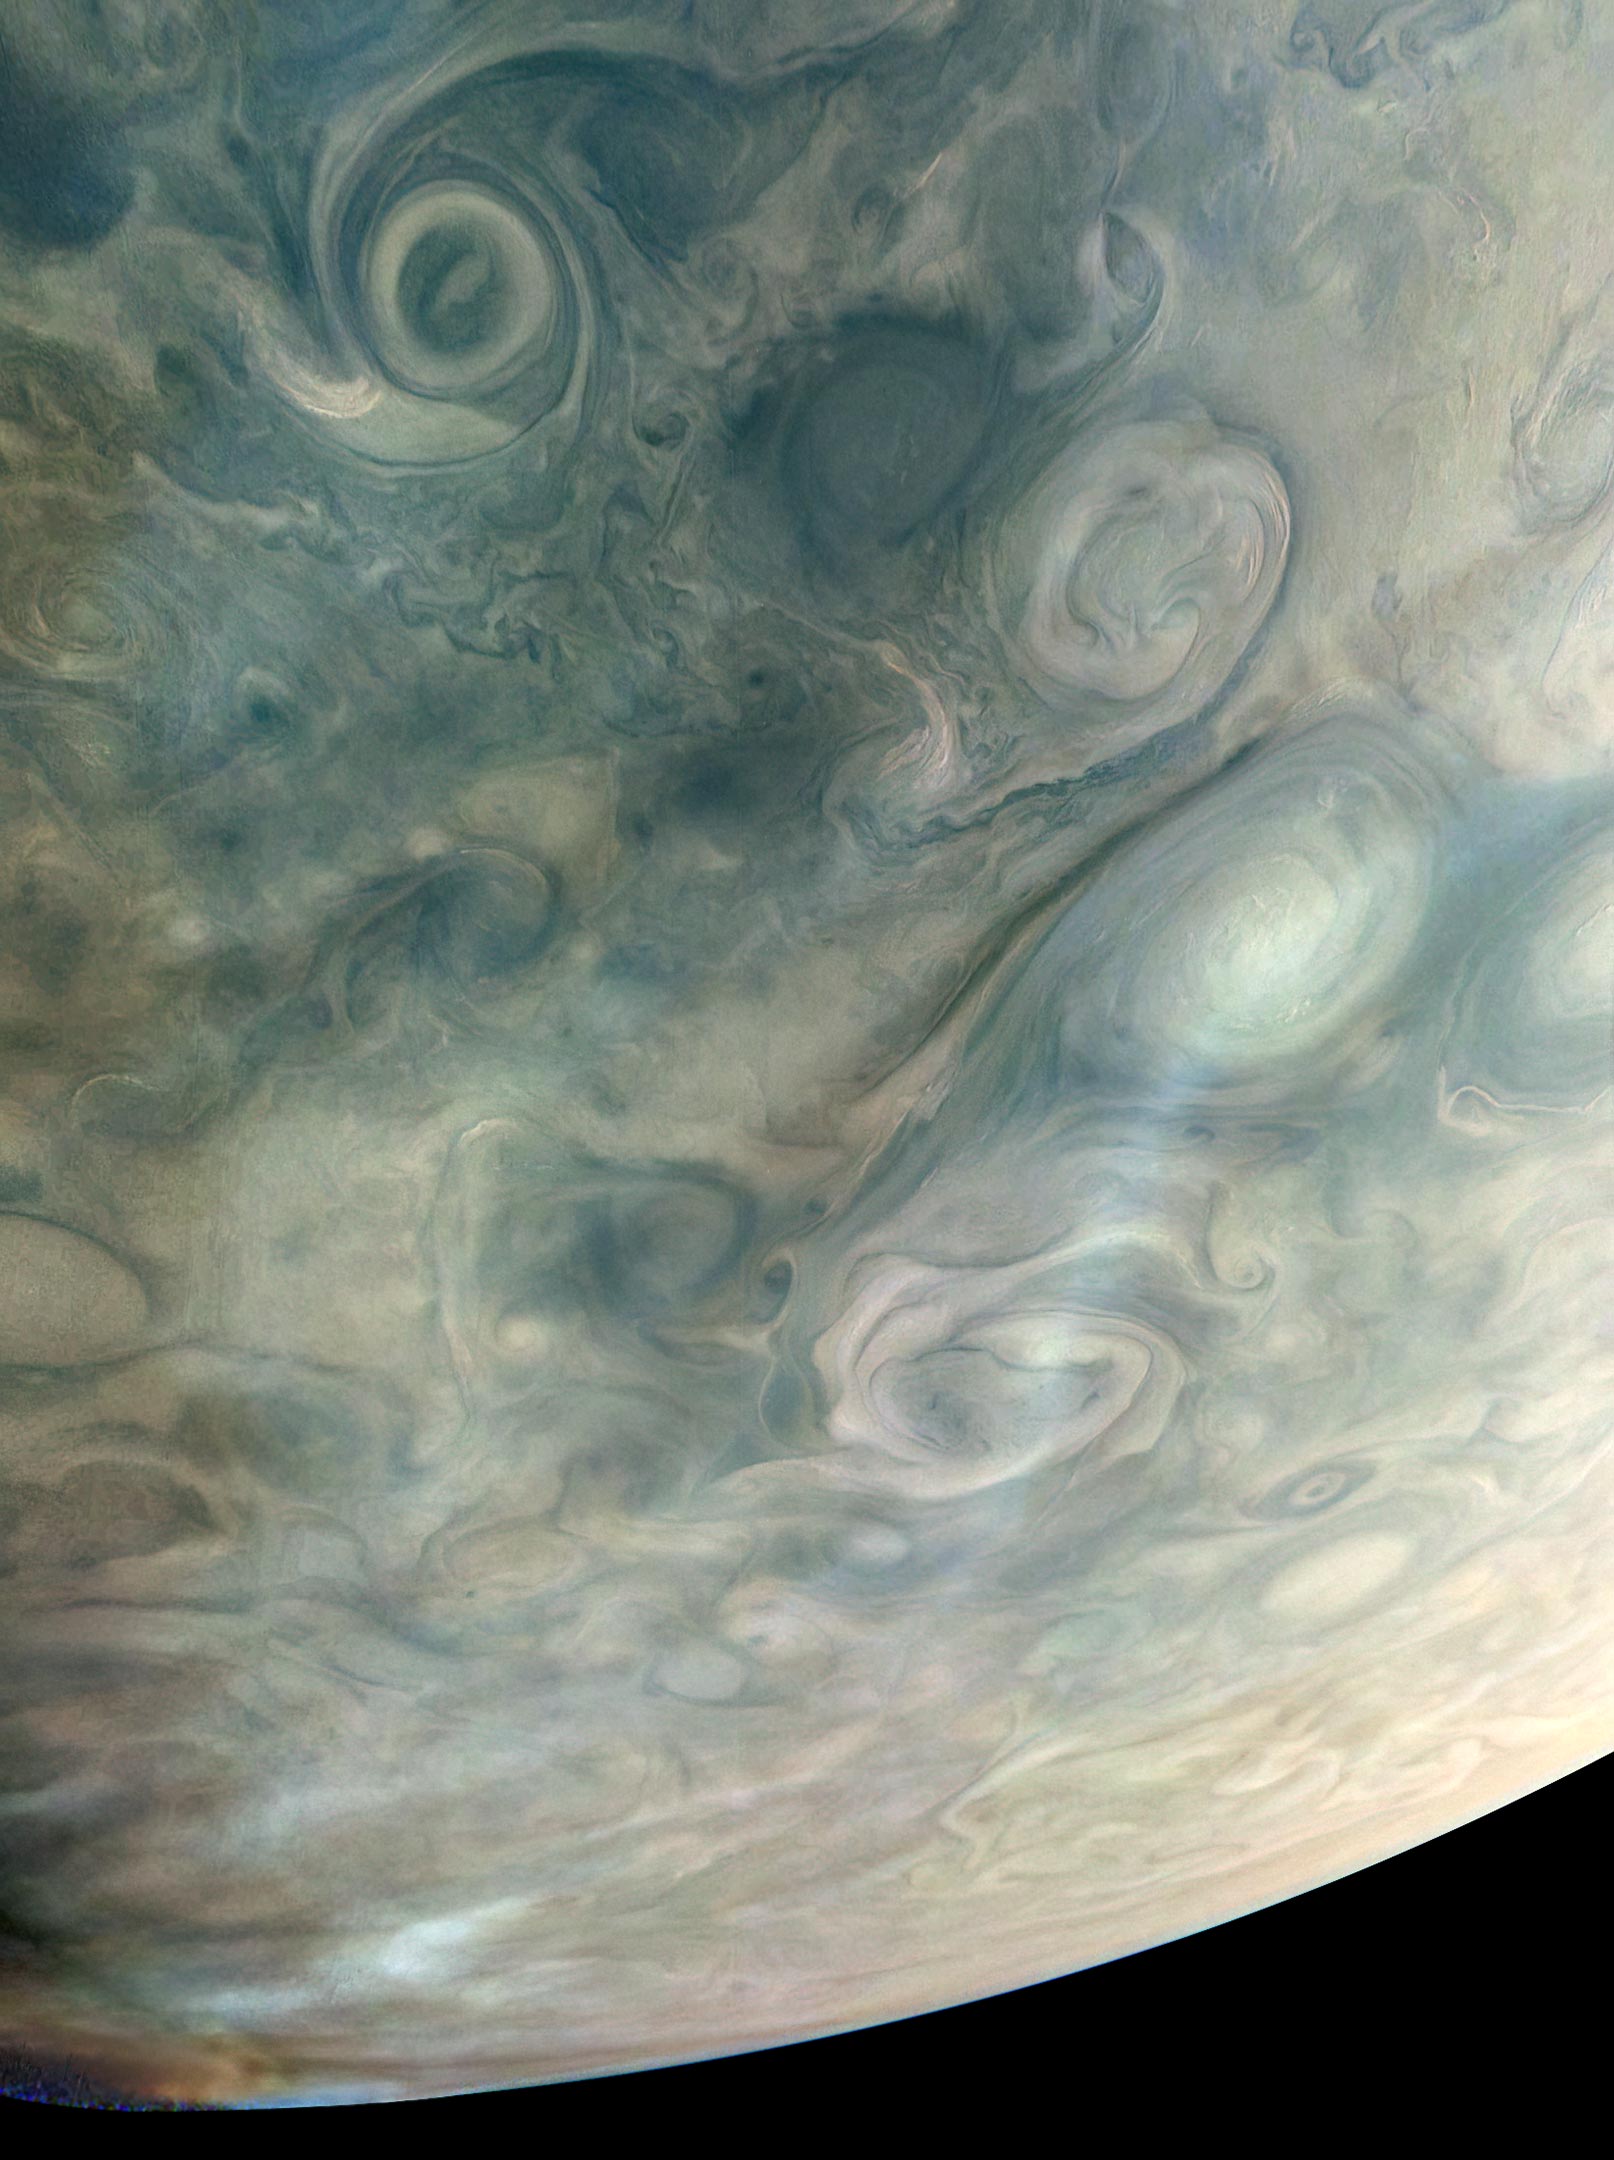 A stunning image of Jupiter’s atmosphere taken by NASA’s Juno spacecraft reveals haze at high altitudes